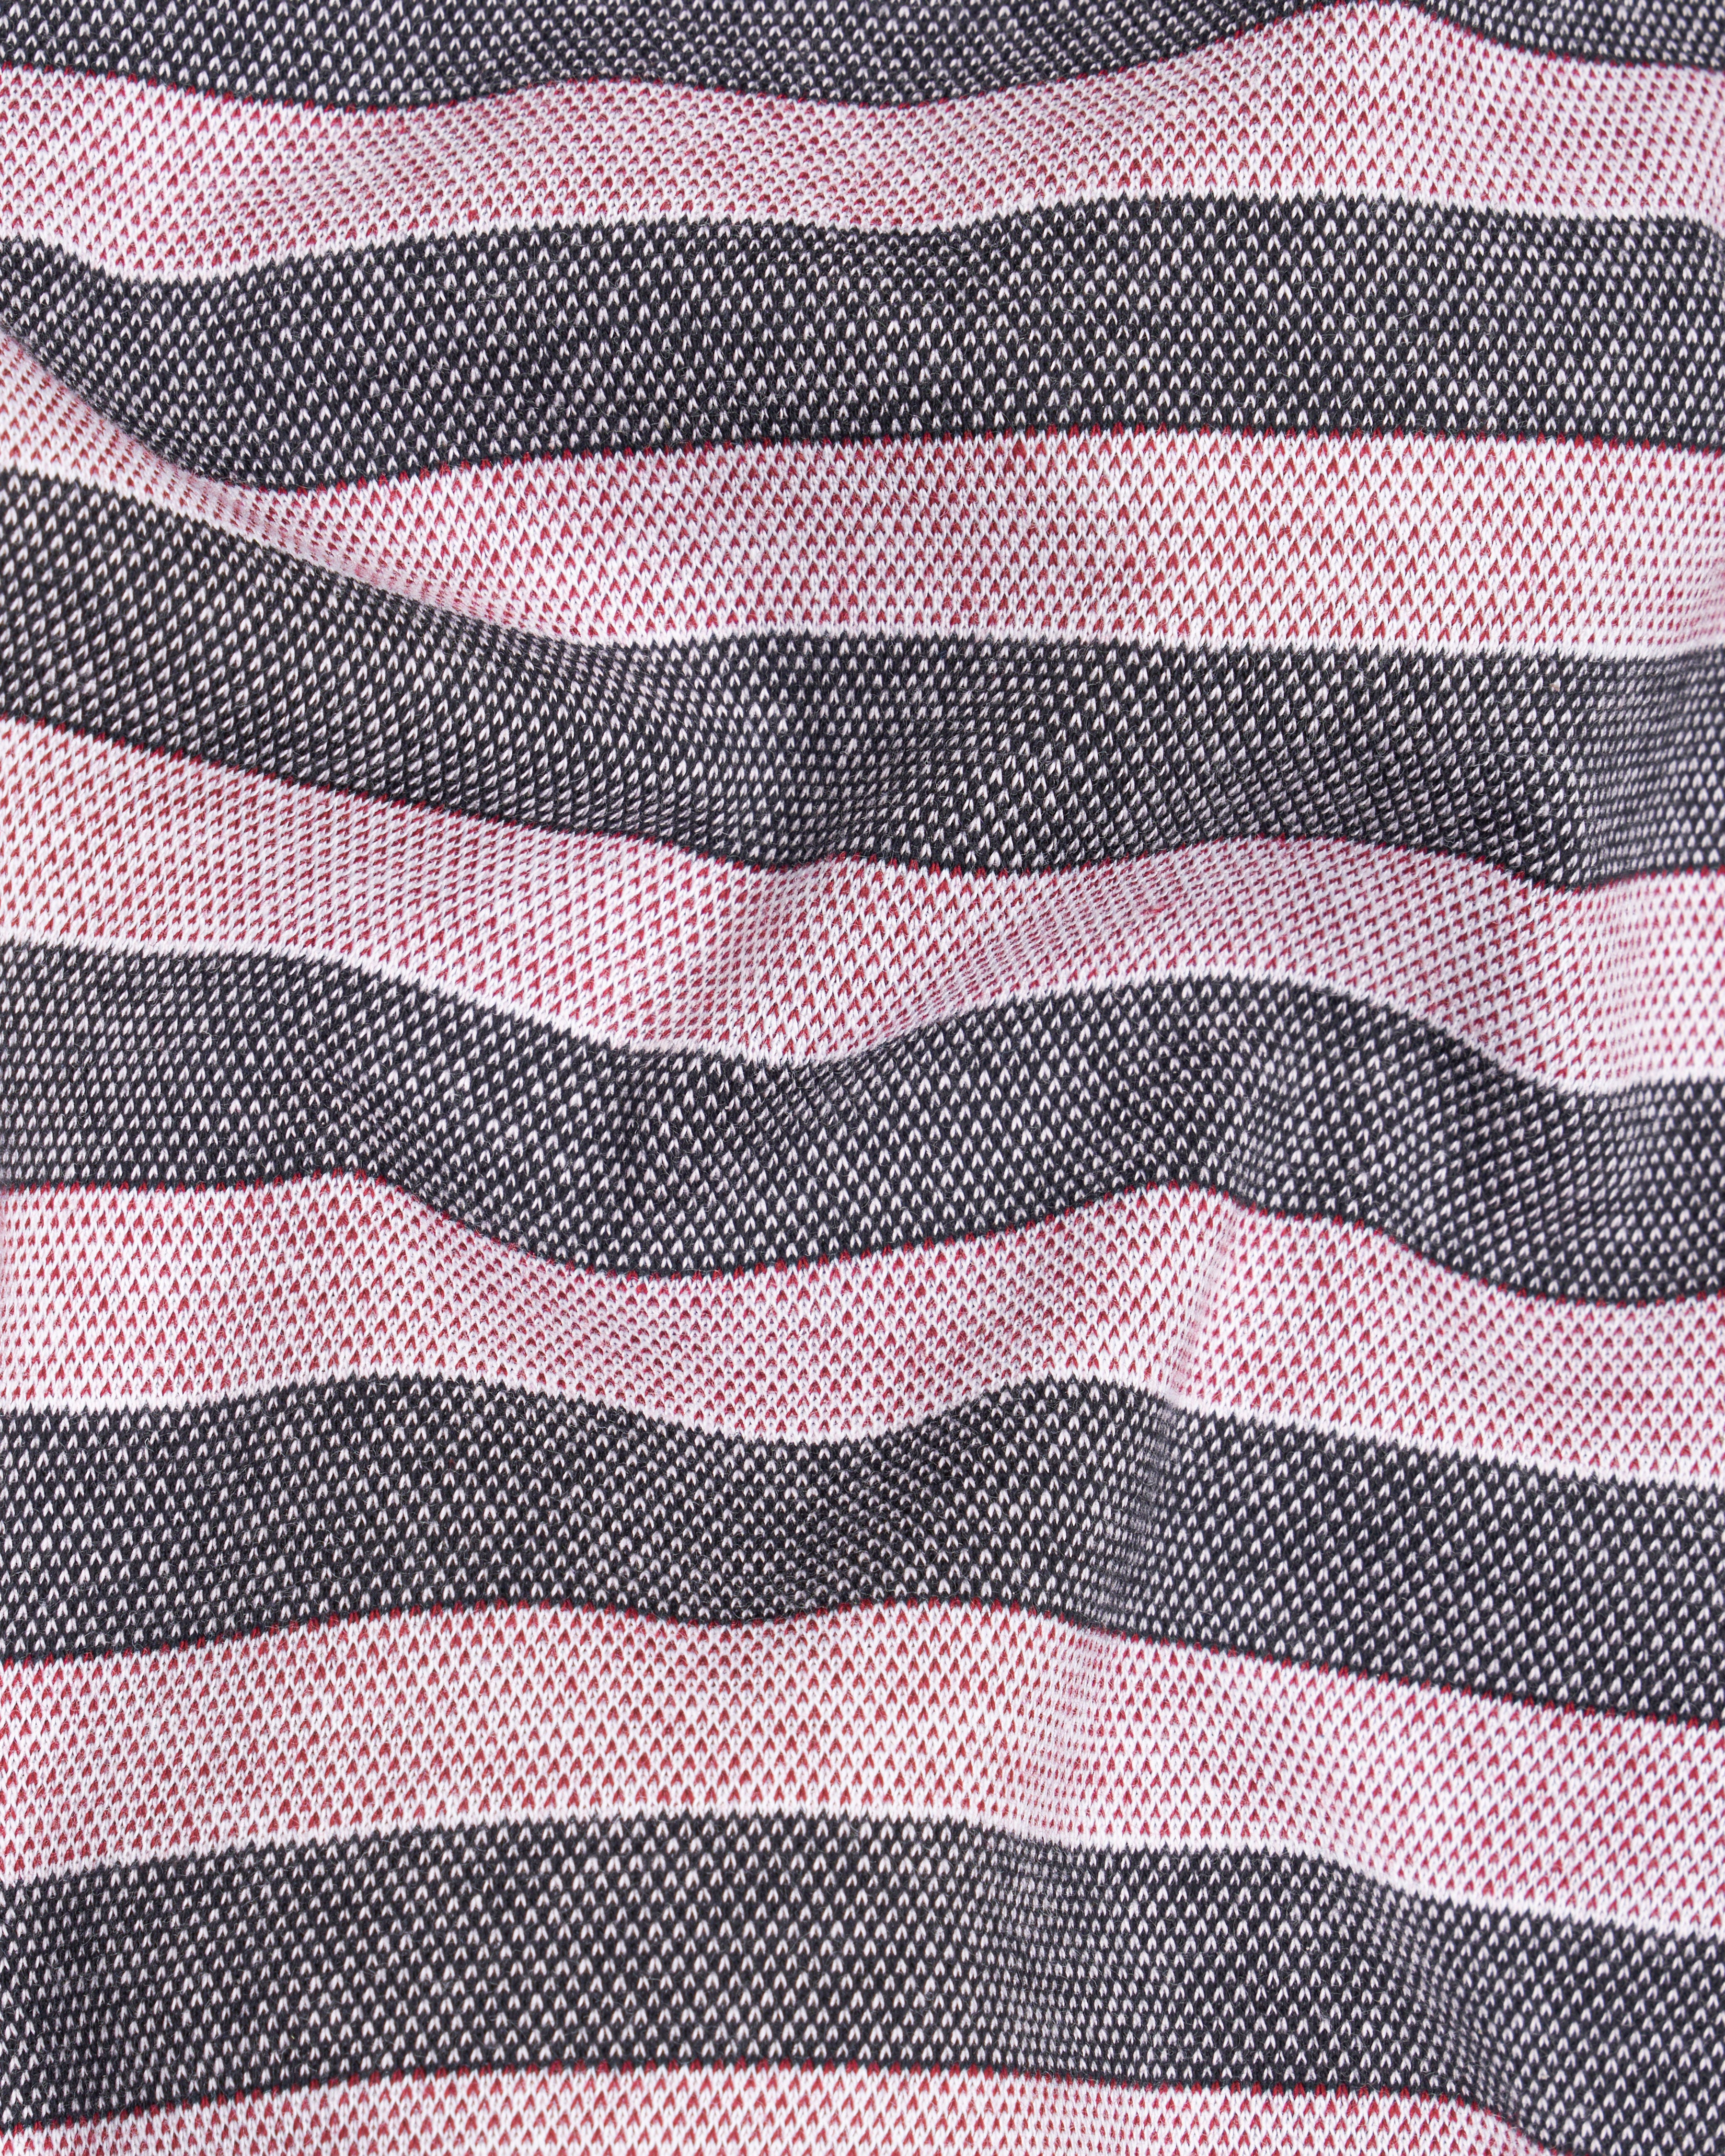 Thistle Pink with Scarpa Gray Striped Pique Polo TS767-S, TS767-M, TS767-L, TS767-XL, TS767-XXL